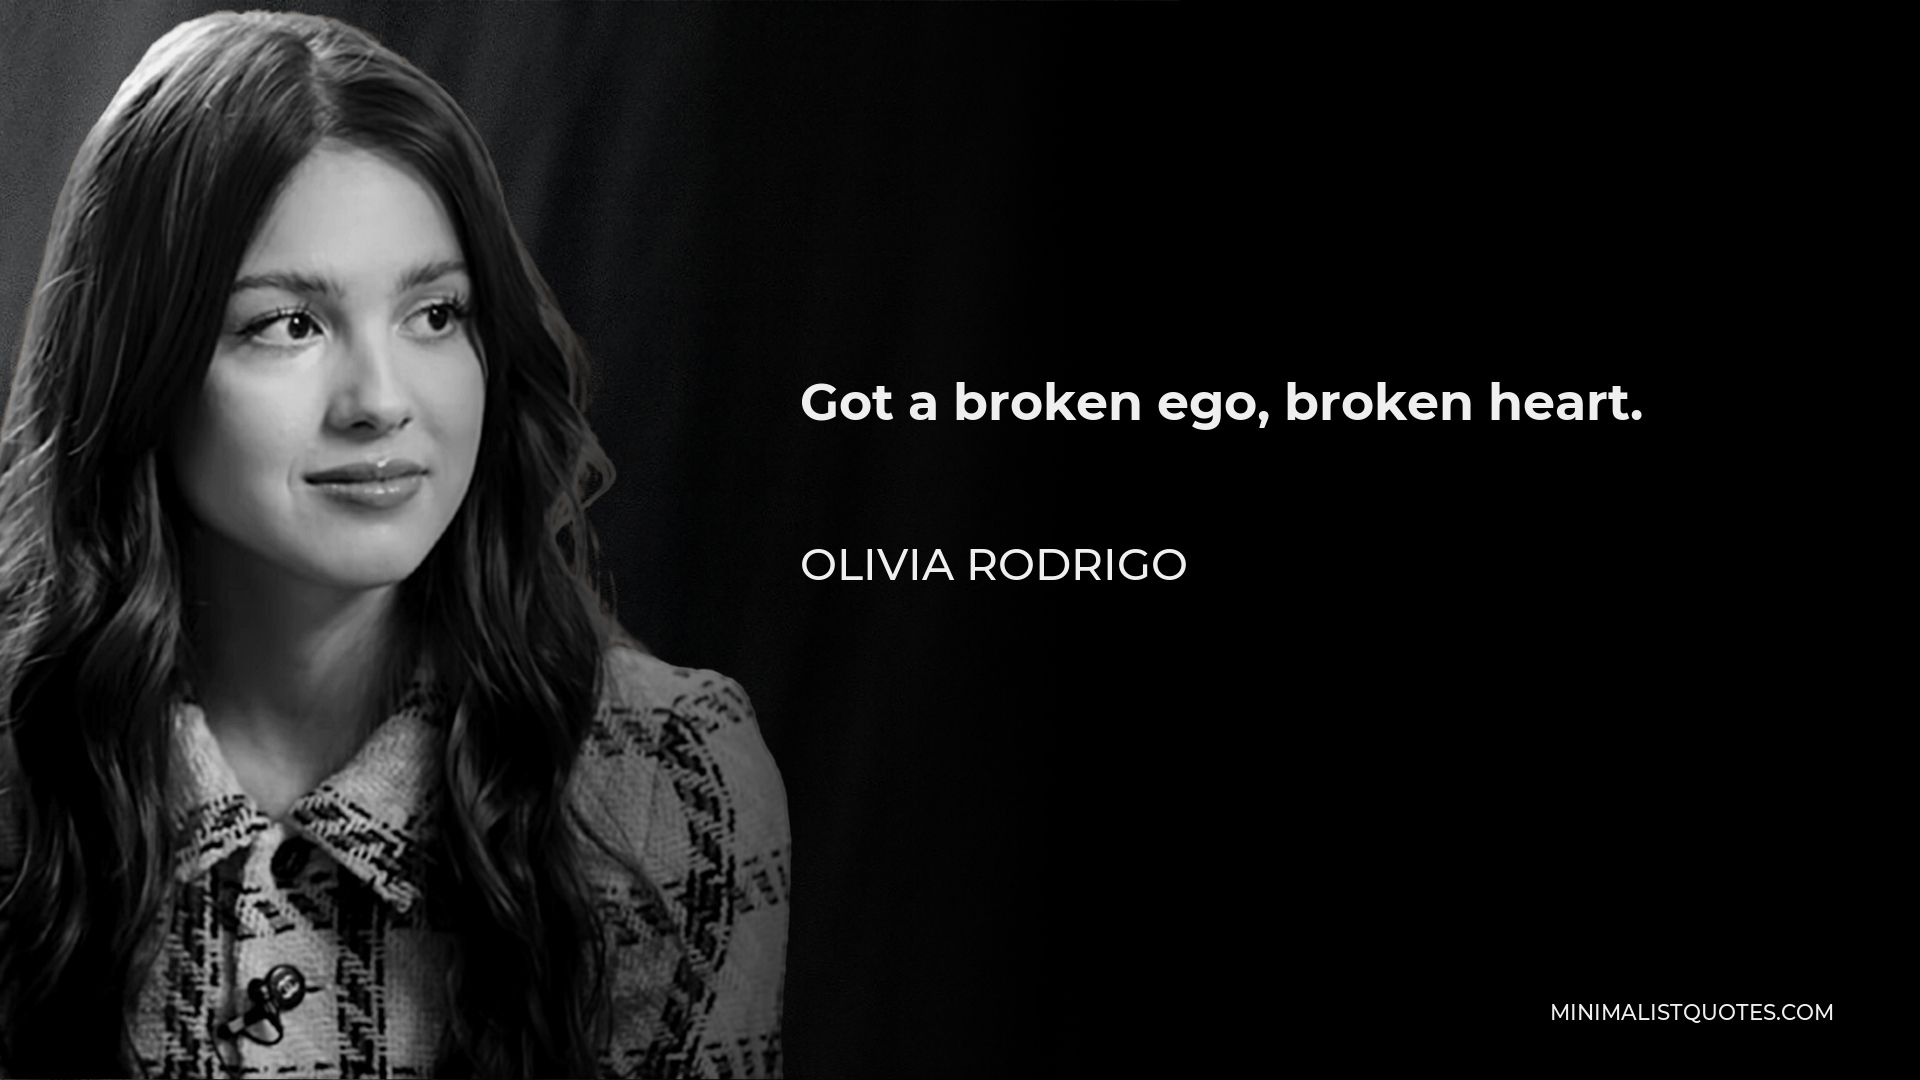 Olivia Rodrigo Quote - Got a broken ego, broken heart.